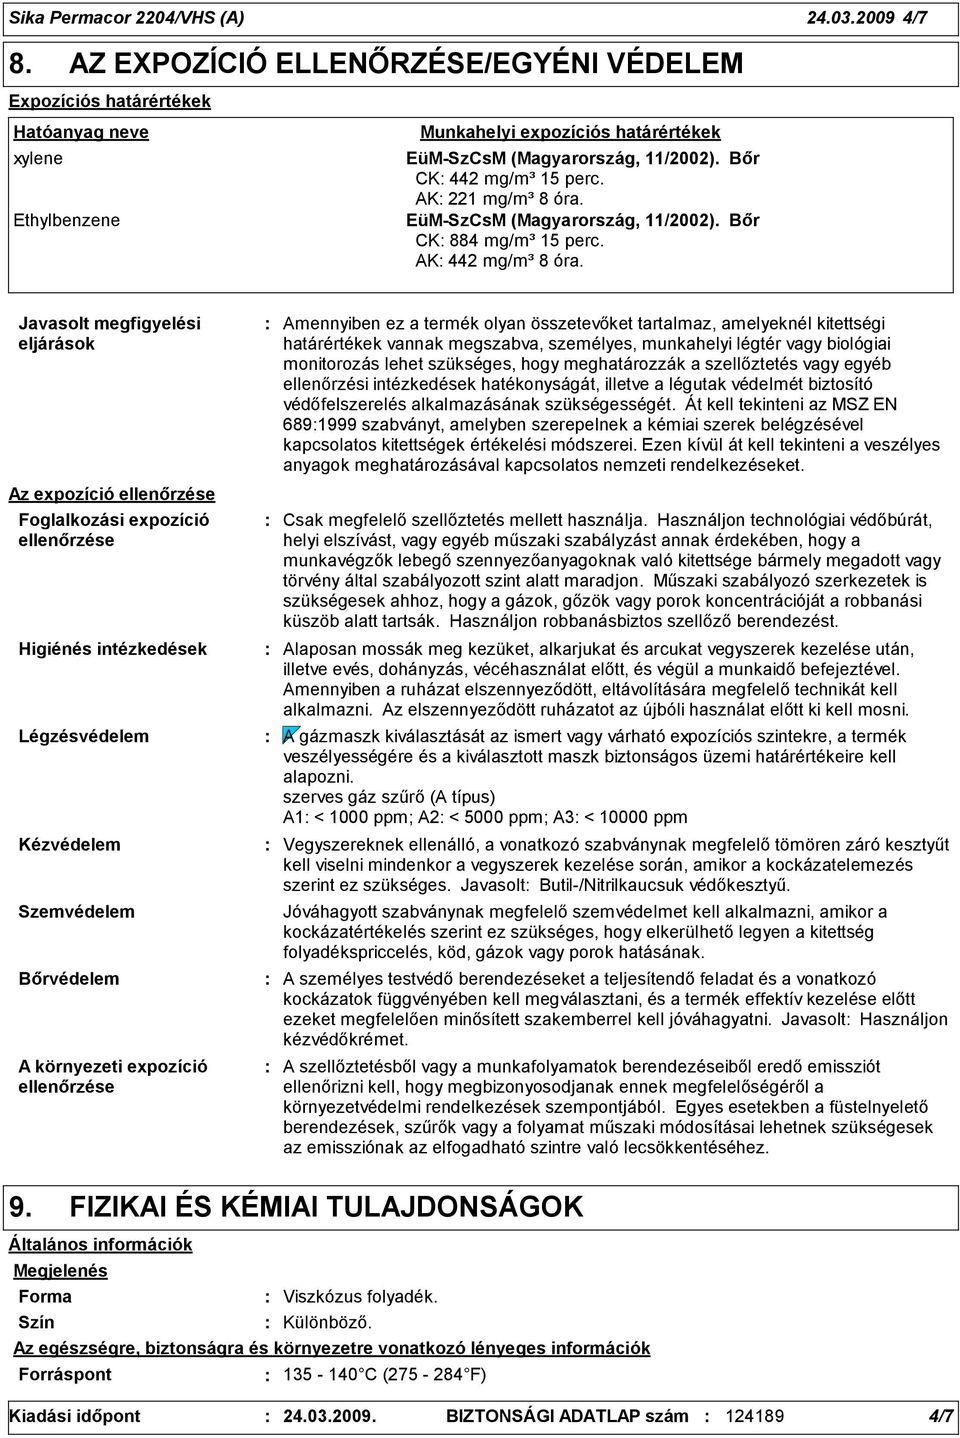 AK 221 mg/m³ 8 óra. EüM-SzCsM (Magyarország, 11/2002). Bőr CK 884 mg/m³ 15 perc. AK 442 mg/m³ 8 óra.